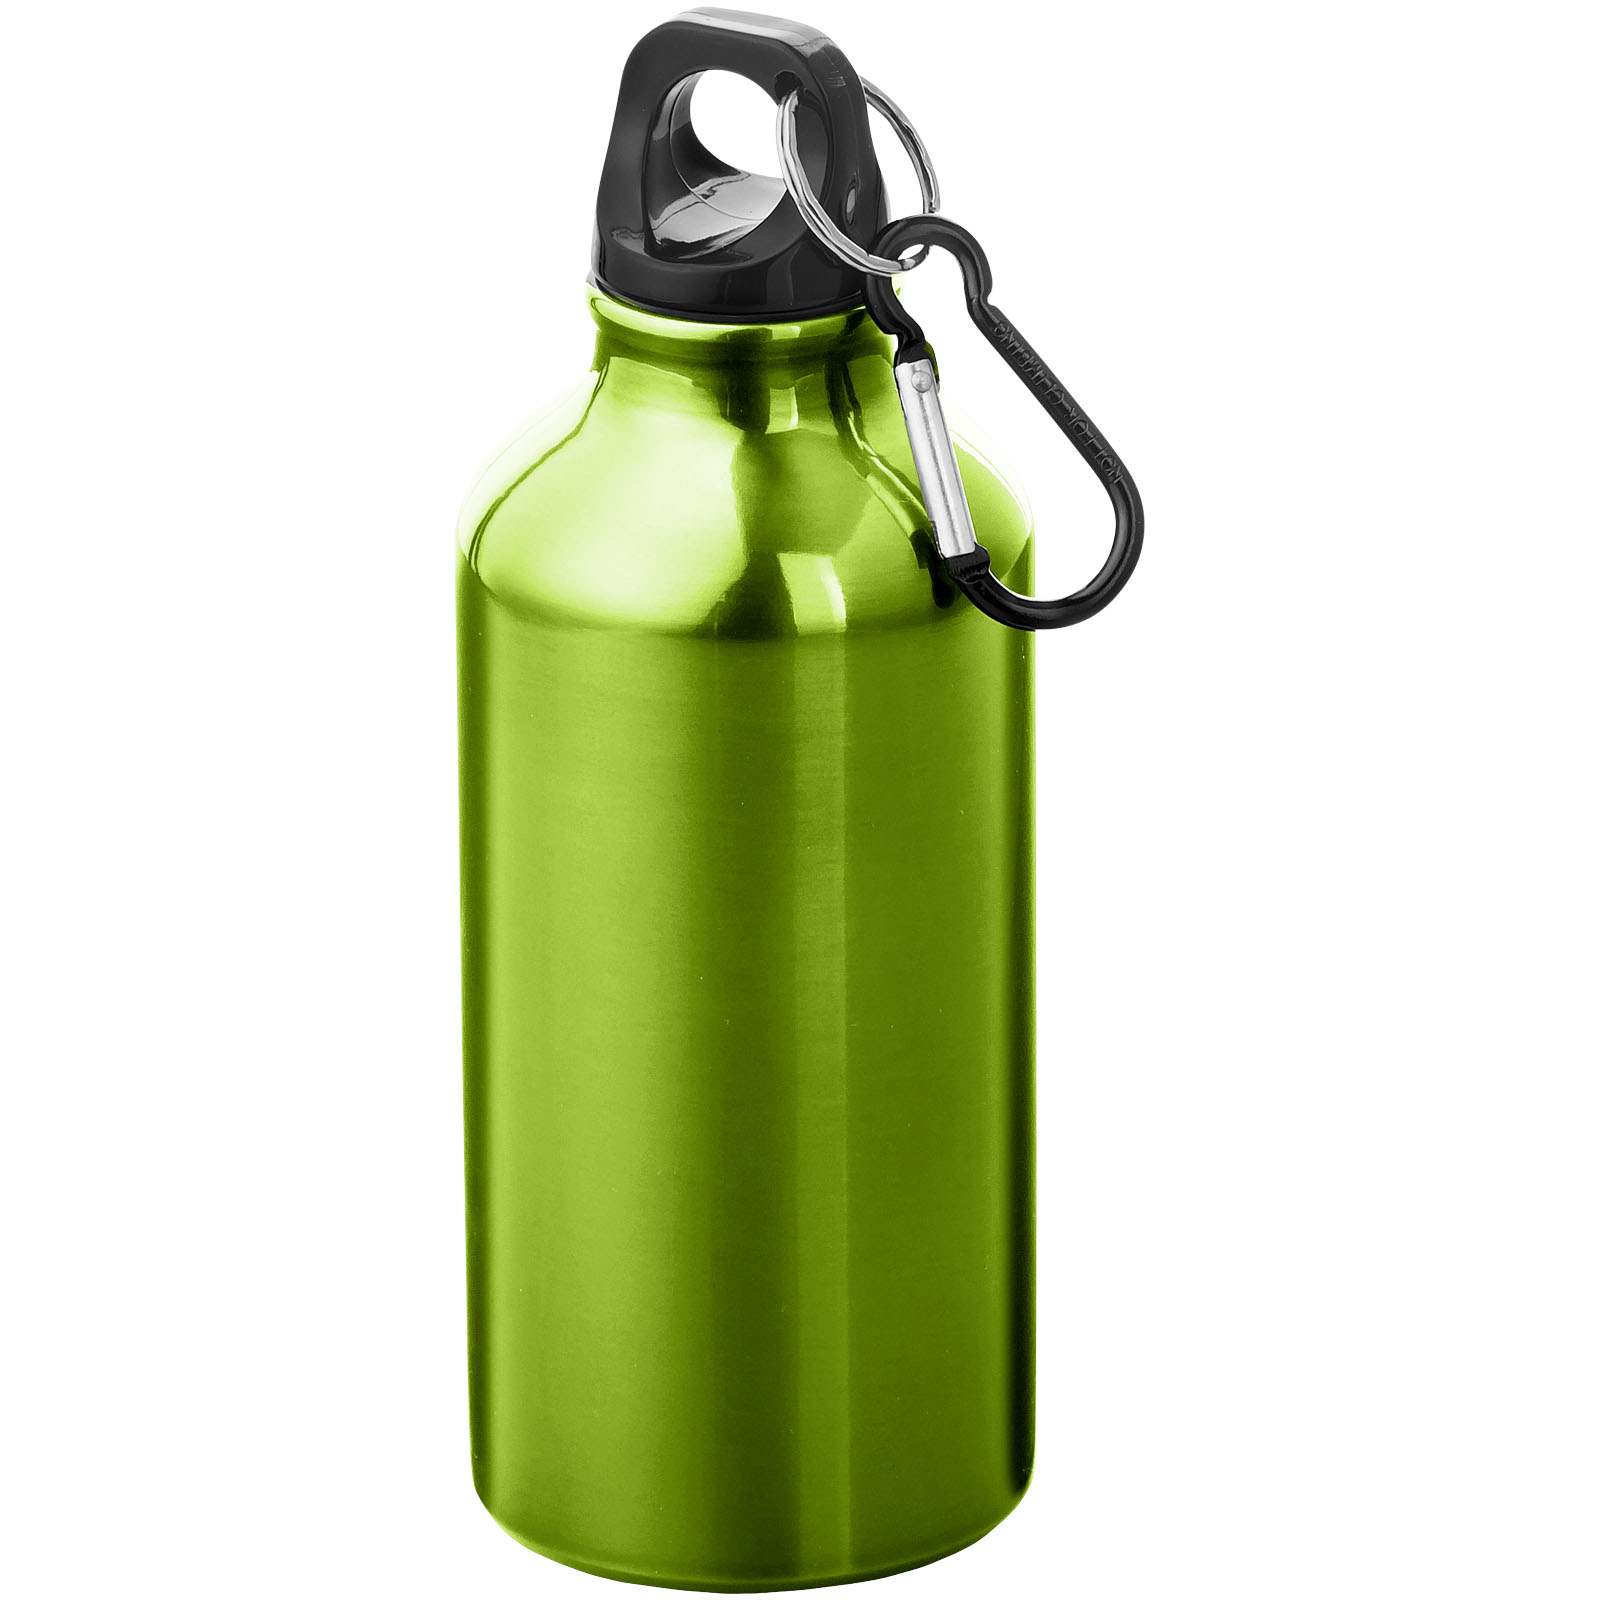 Water bottles - Oregon 400 ml aluminium water bottle with carabiner